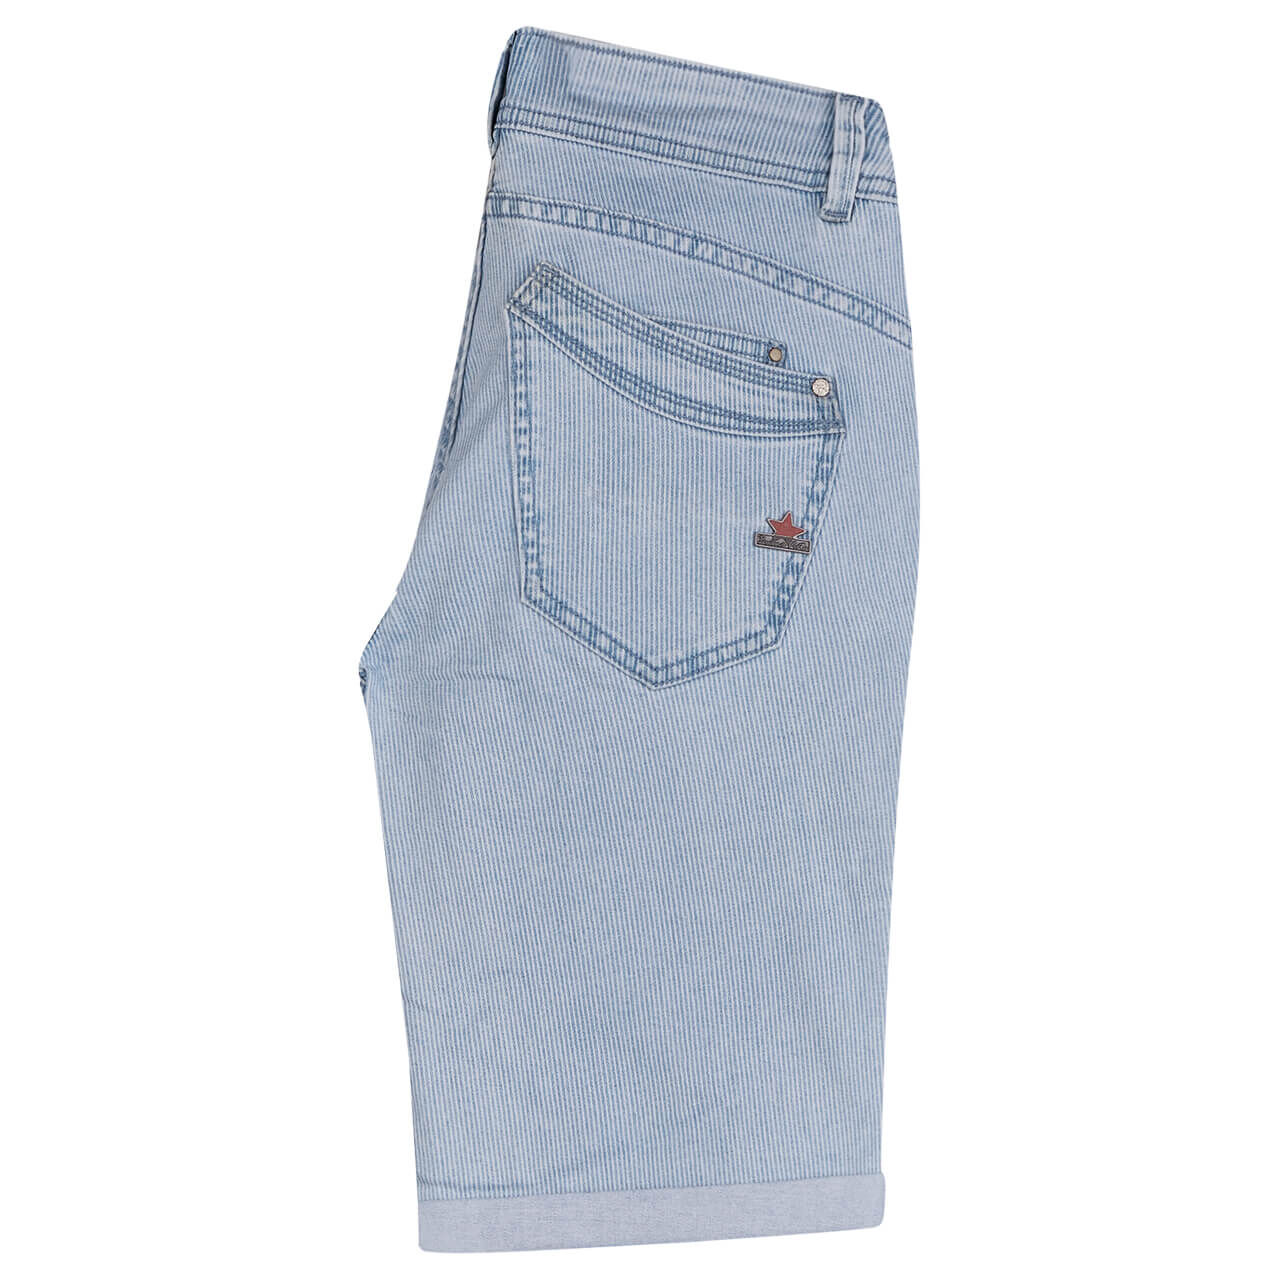 Buena Vista Malibu-Short Stretch Denim Jeans light stripes